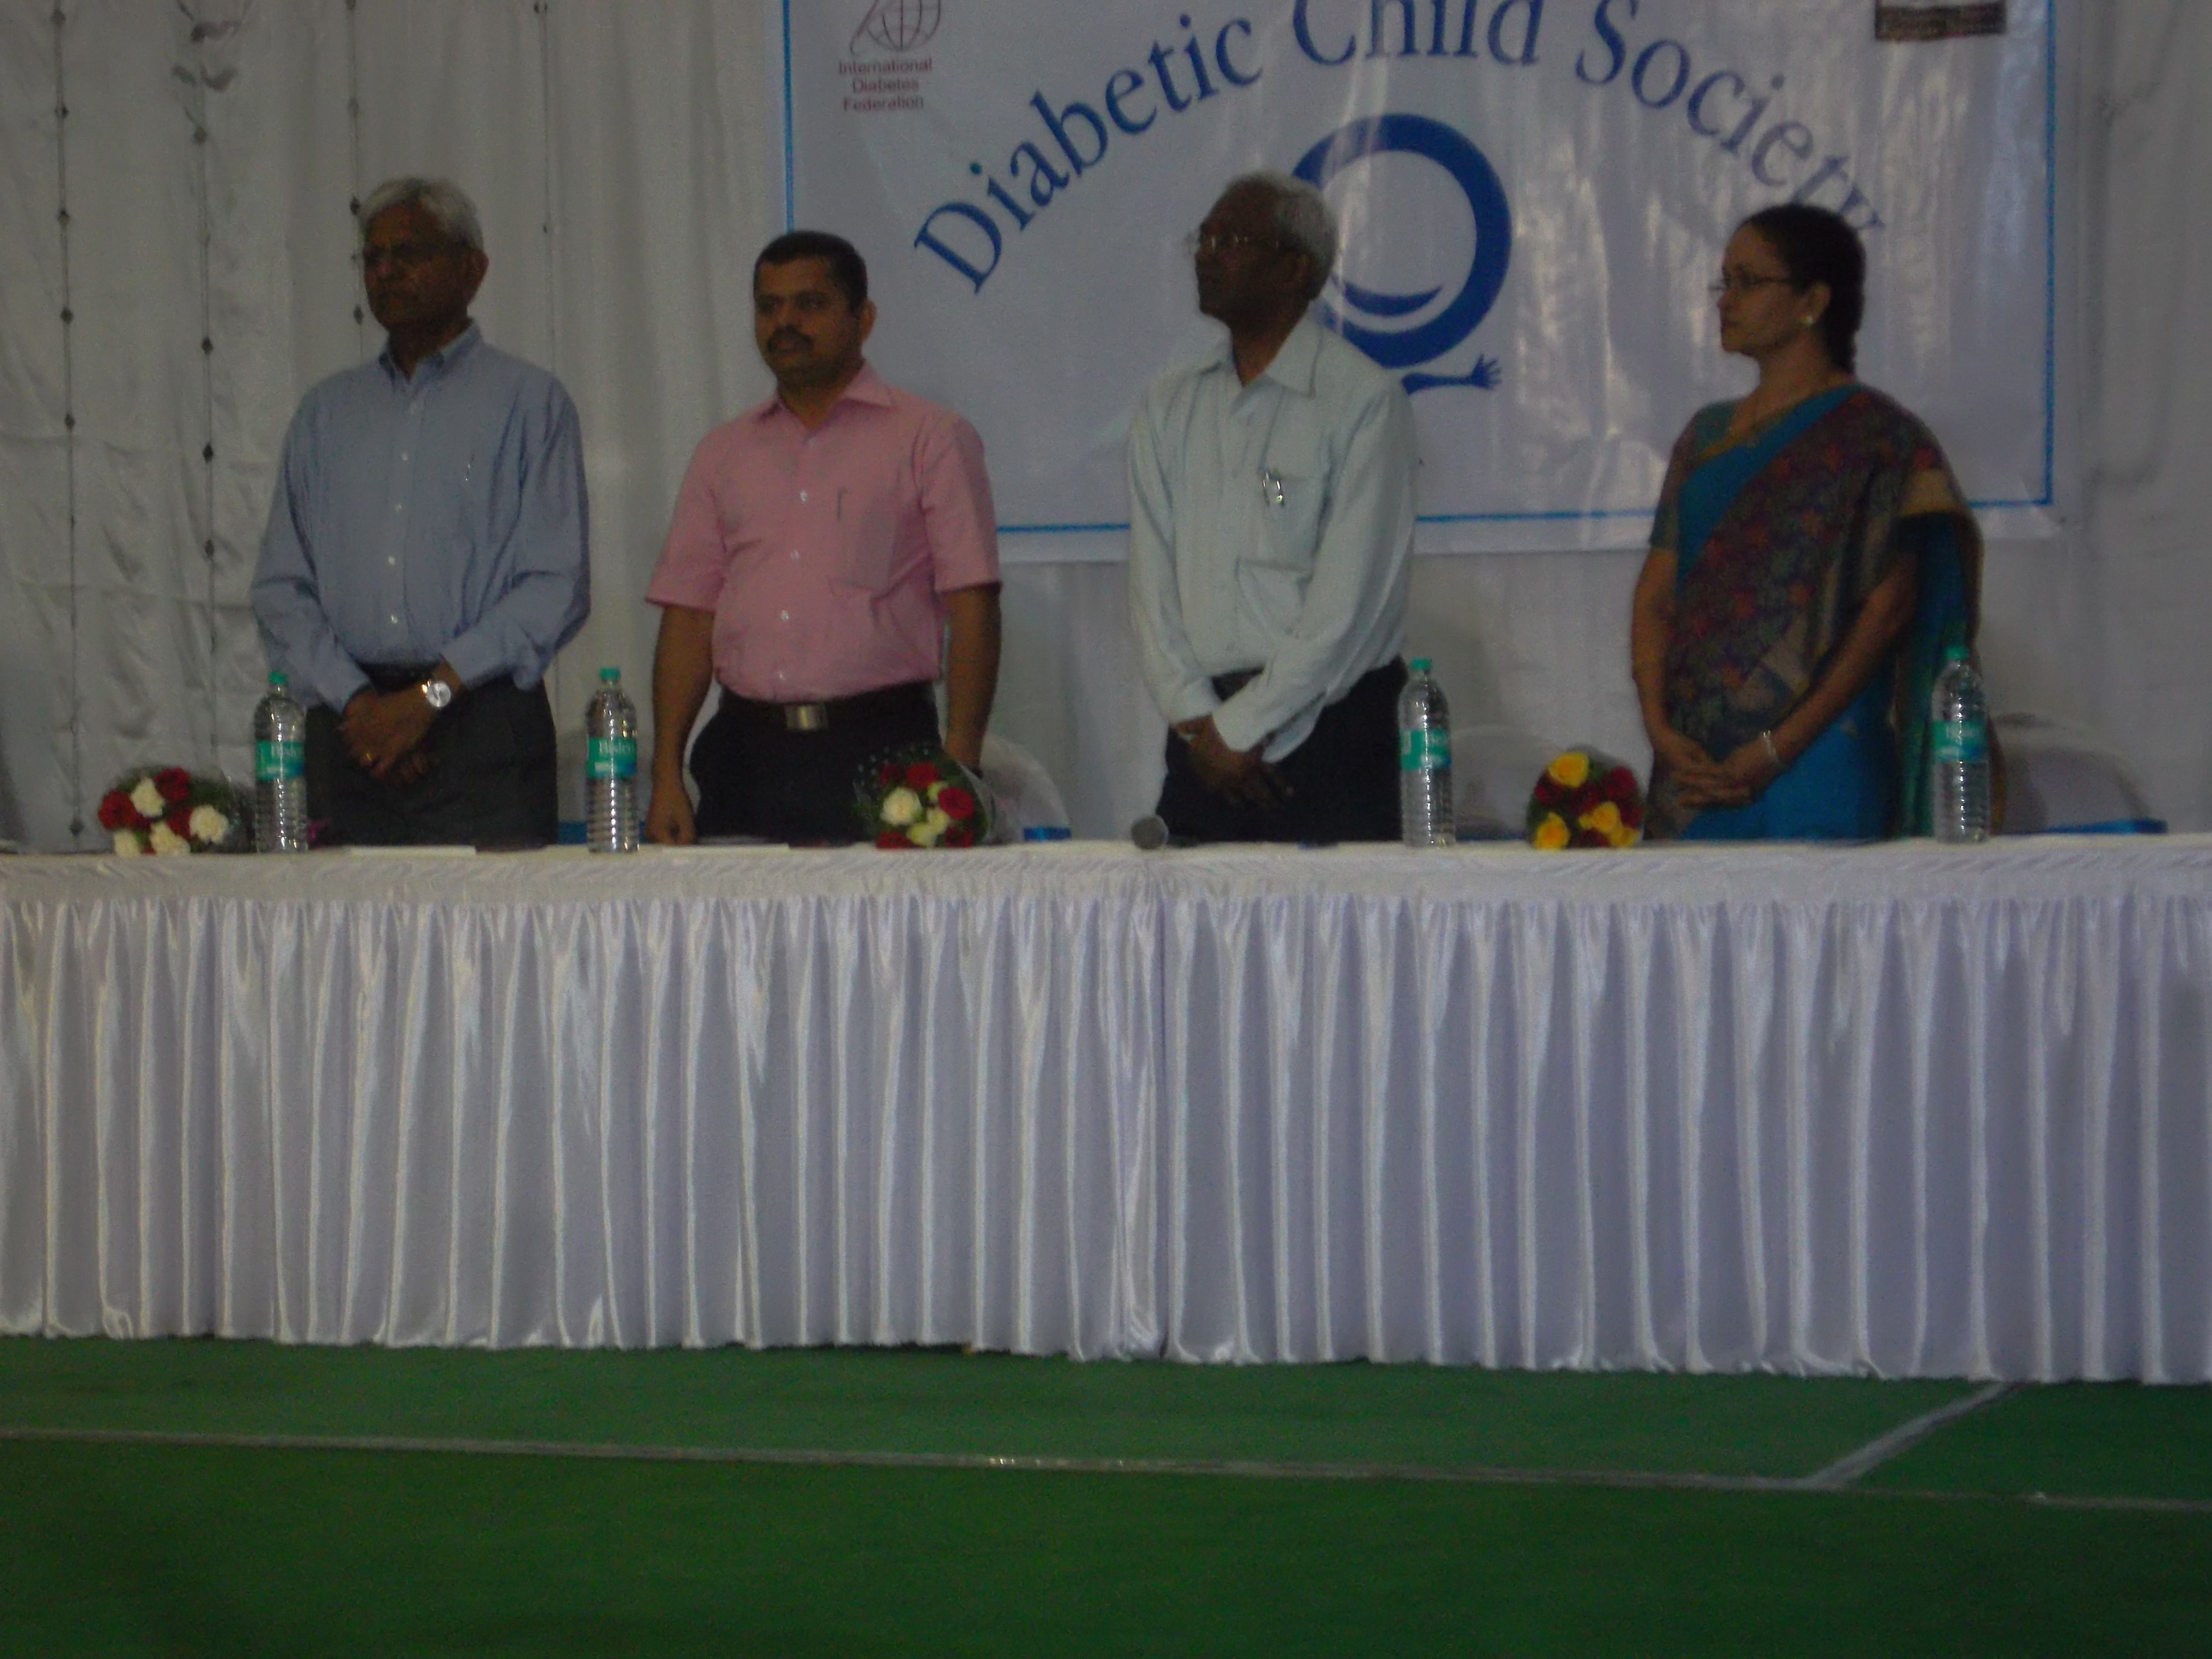 Conference-Diabetic-Child-Society-Vizag-AP-India-SAM_2043